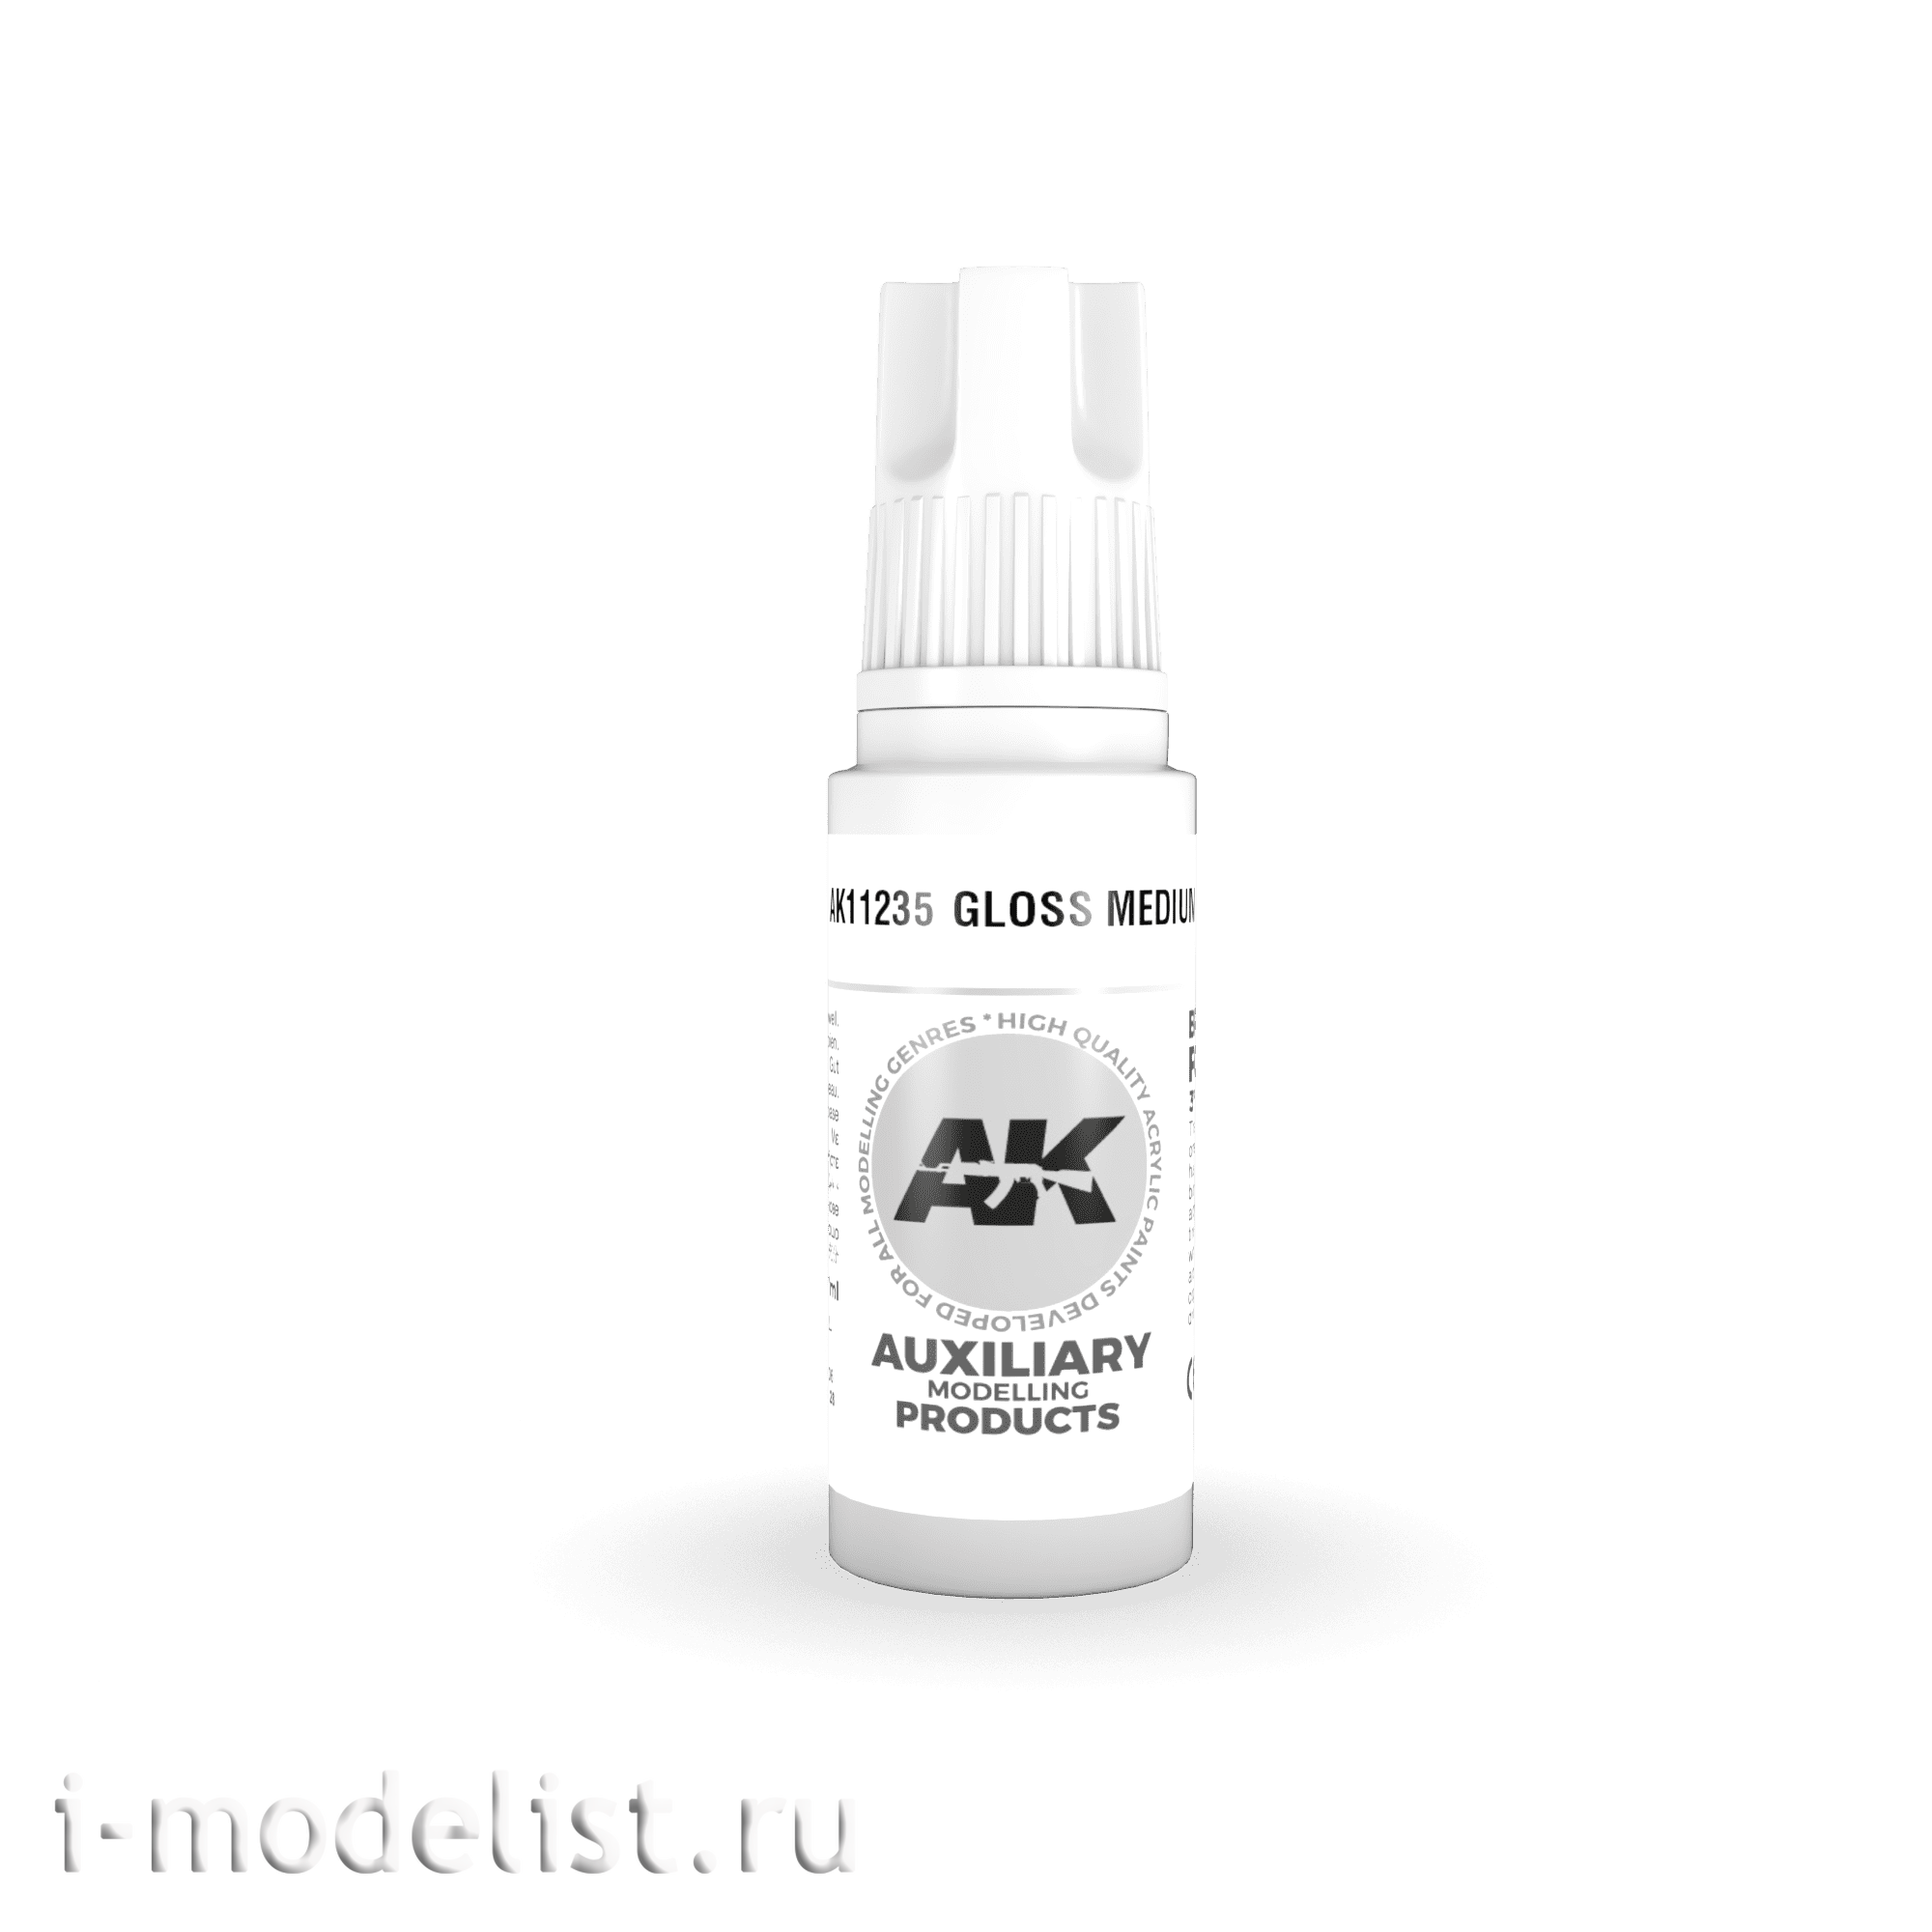 AK11235 AK Interactive acrylic Paint 3rd Generation Gloss Medium 17ml